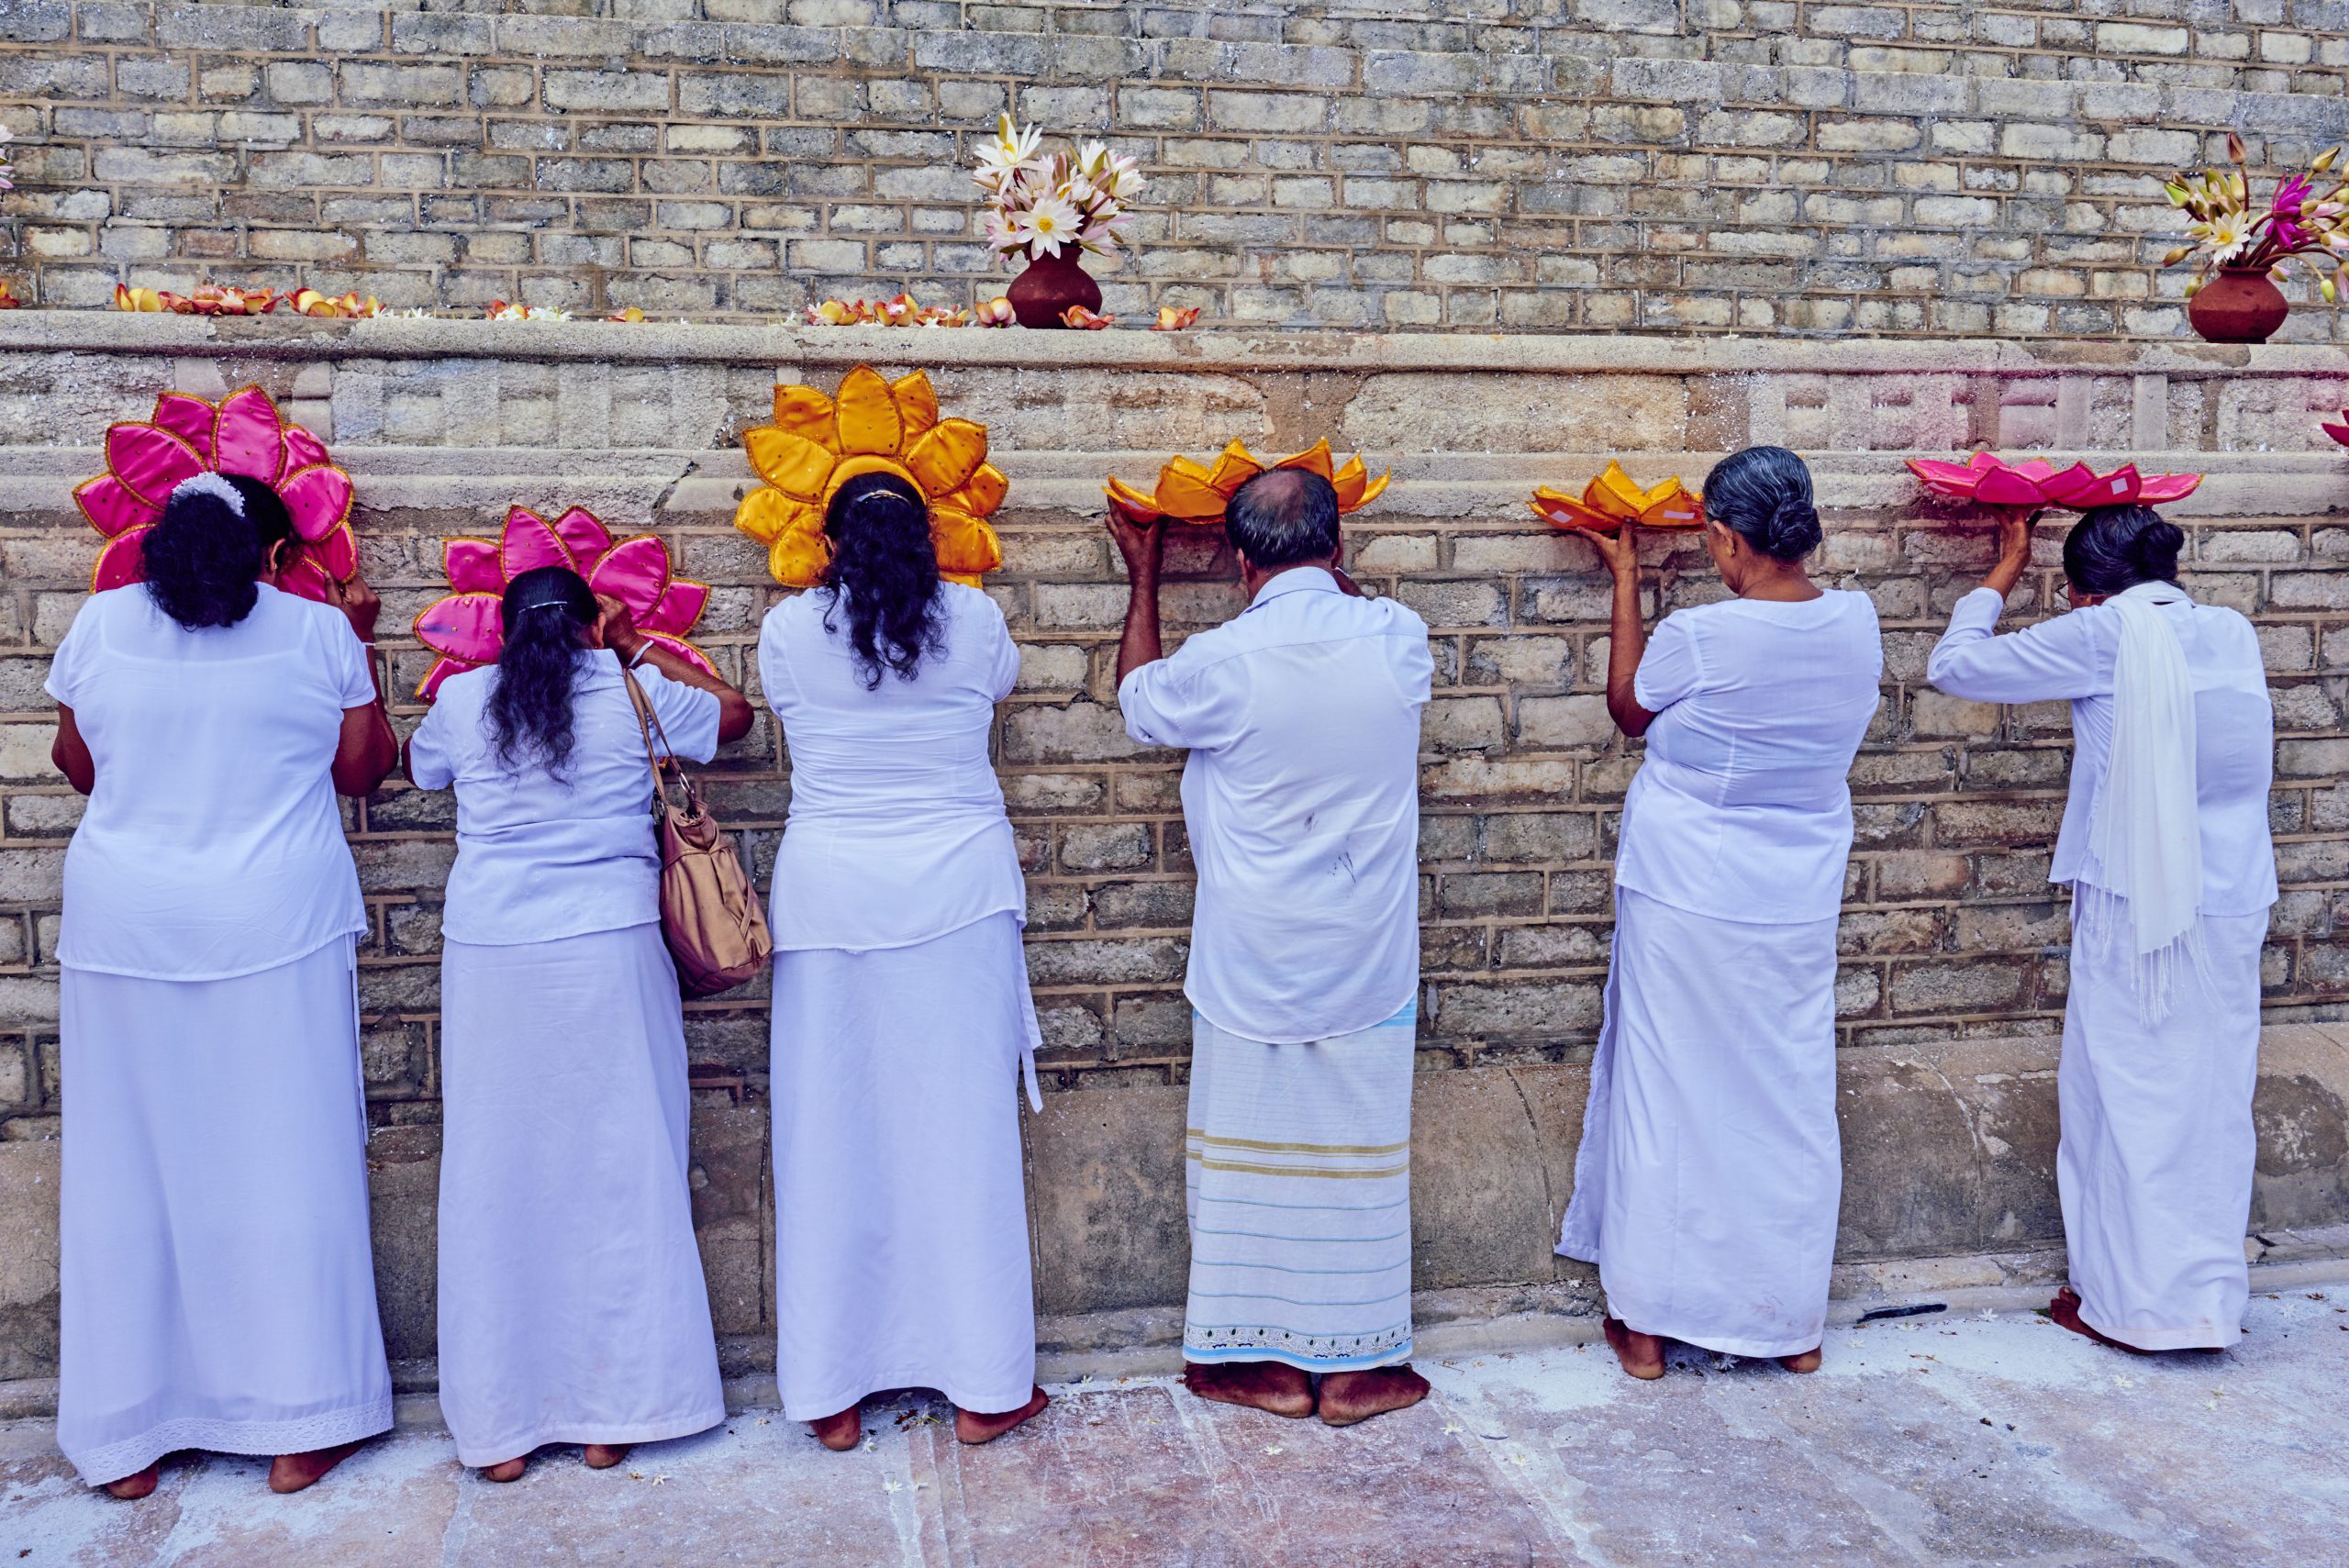 Sri Lanka, Anuradhapura, Ruvanvelisaya dagoba